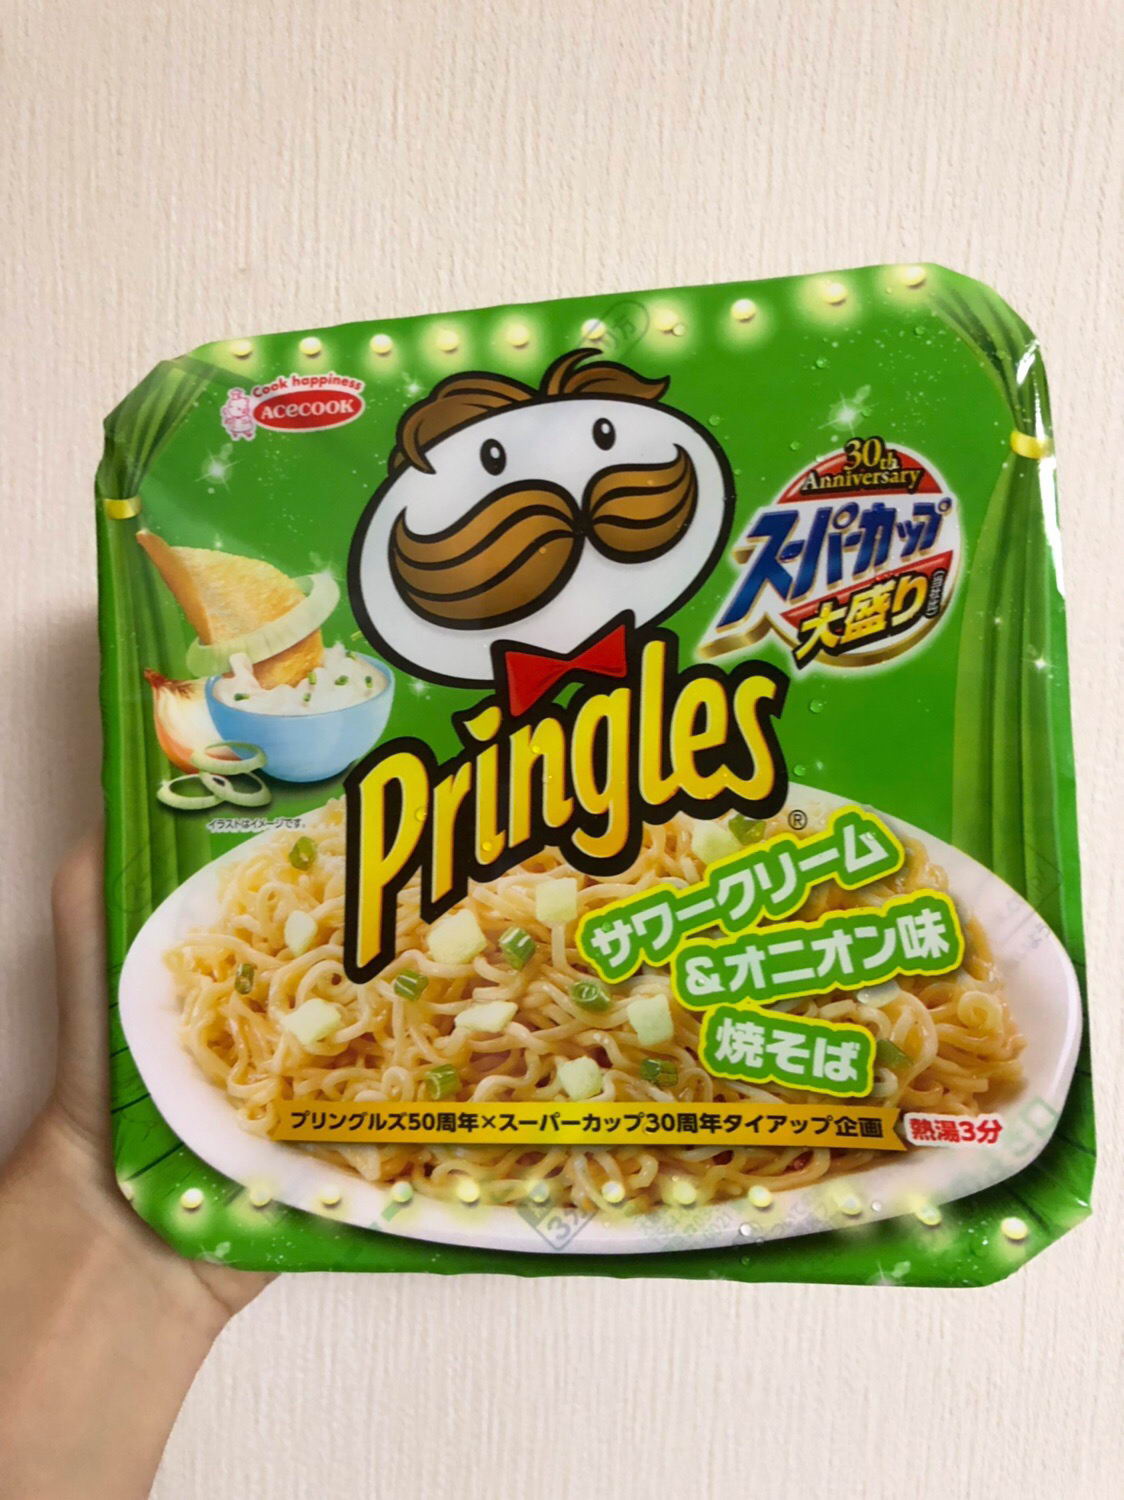 Pringles brand noodles